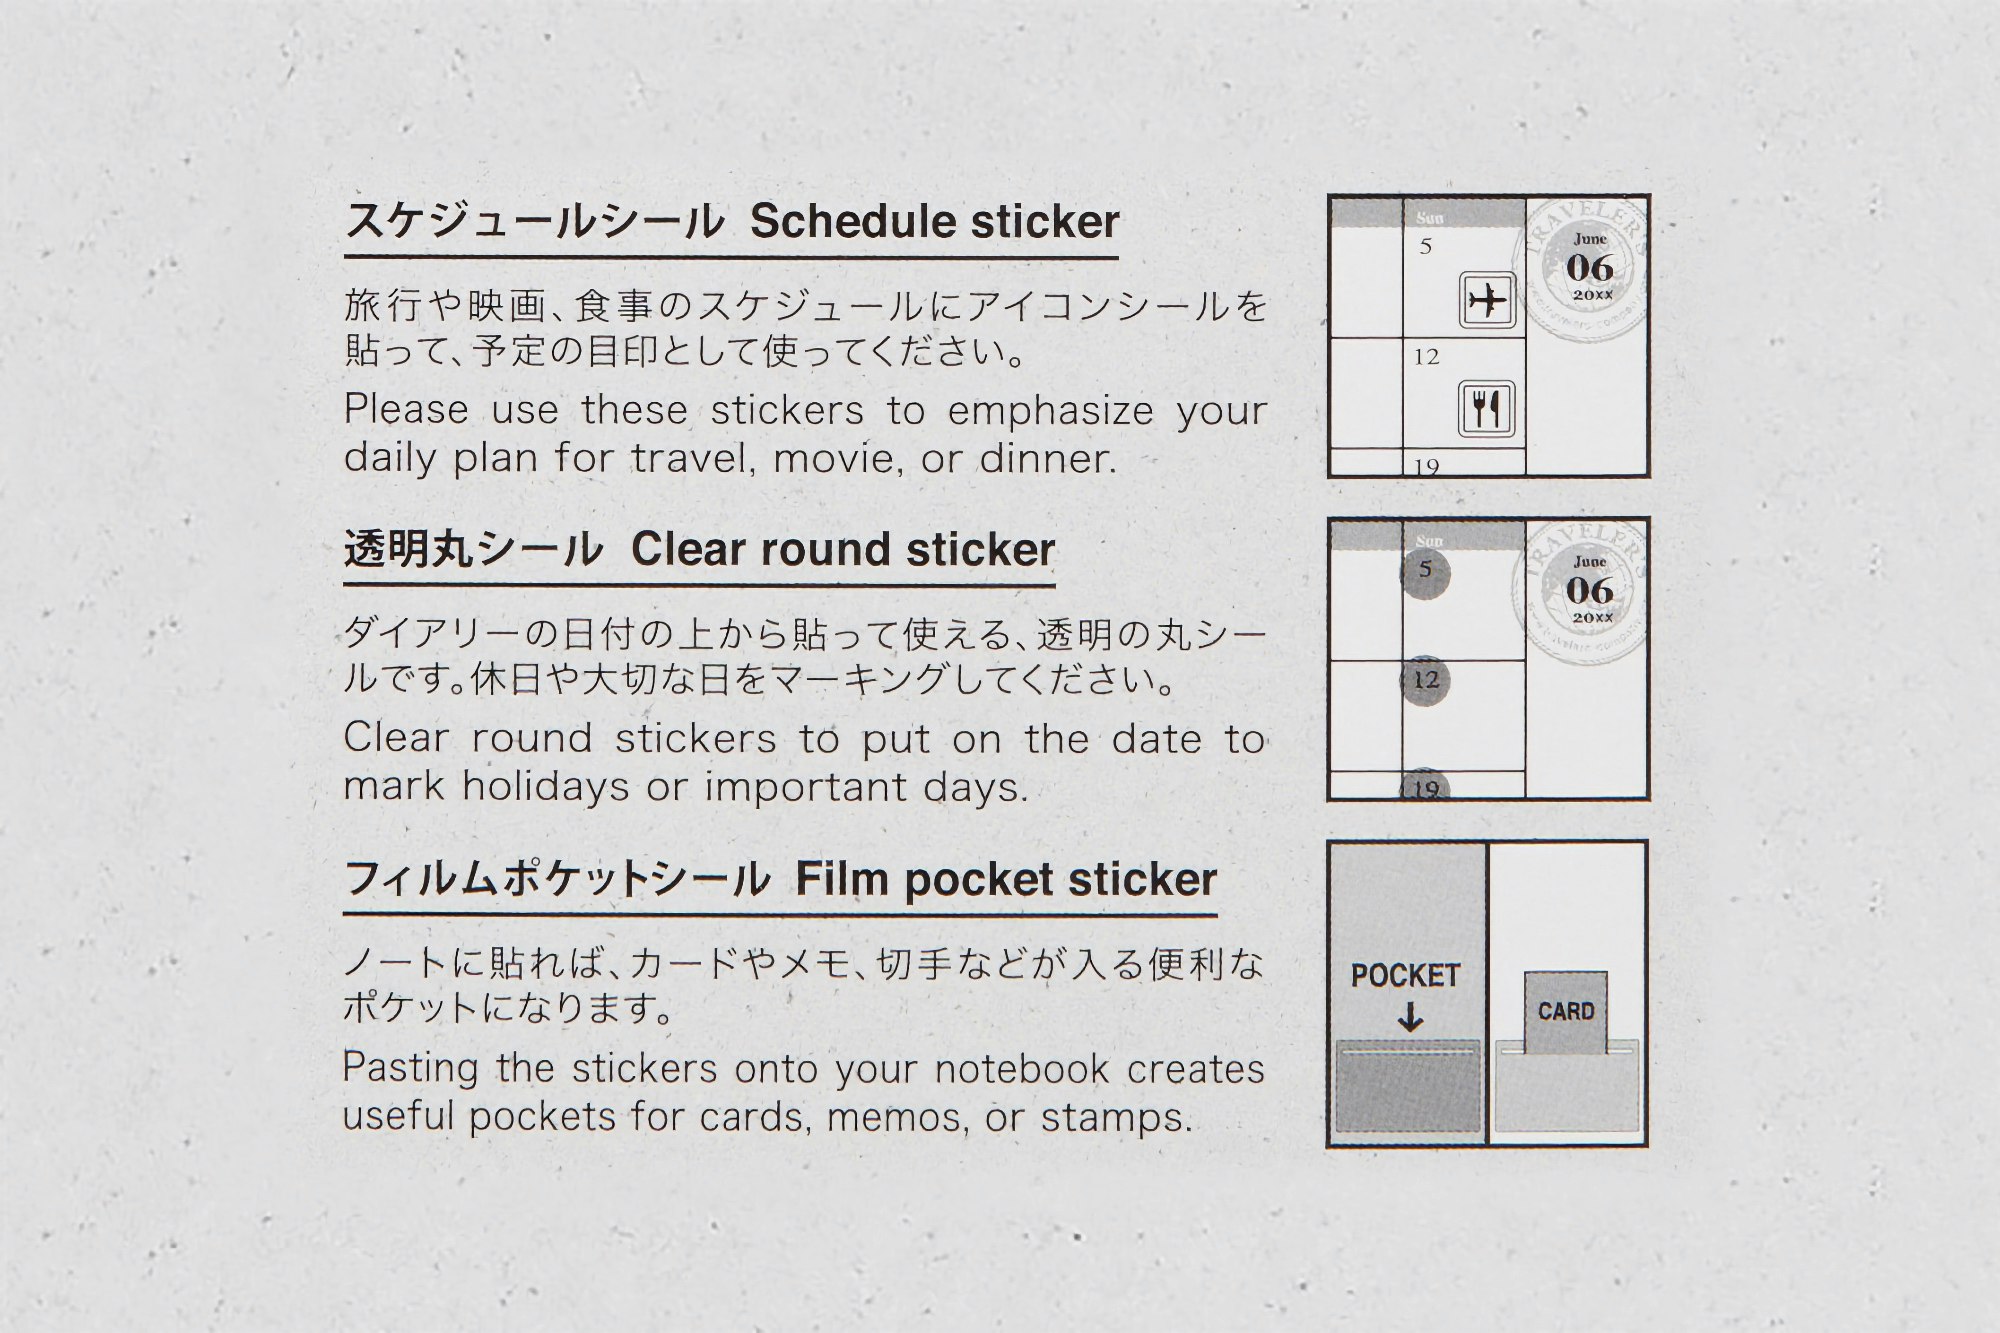 Traveler’s Company Traveler's notebook - 2024 Customized sticker set